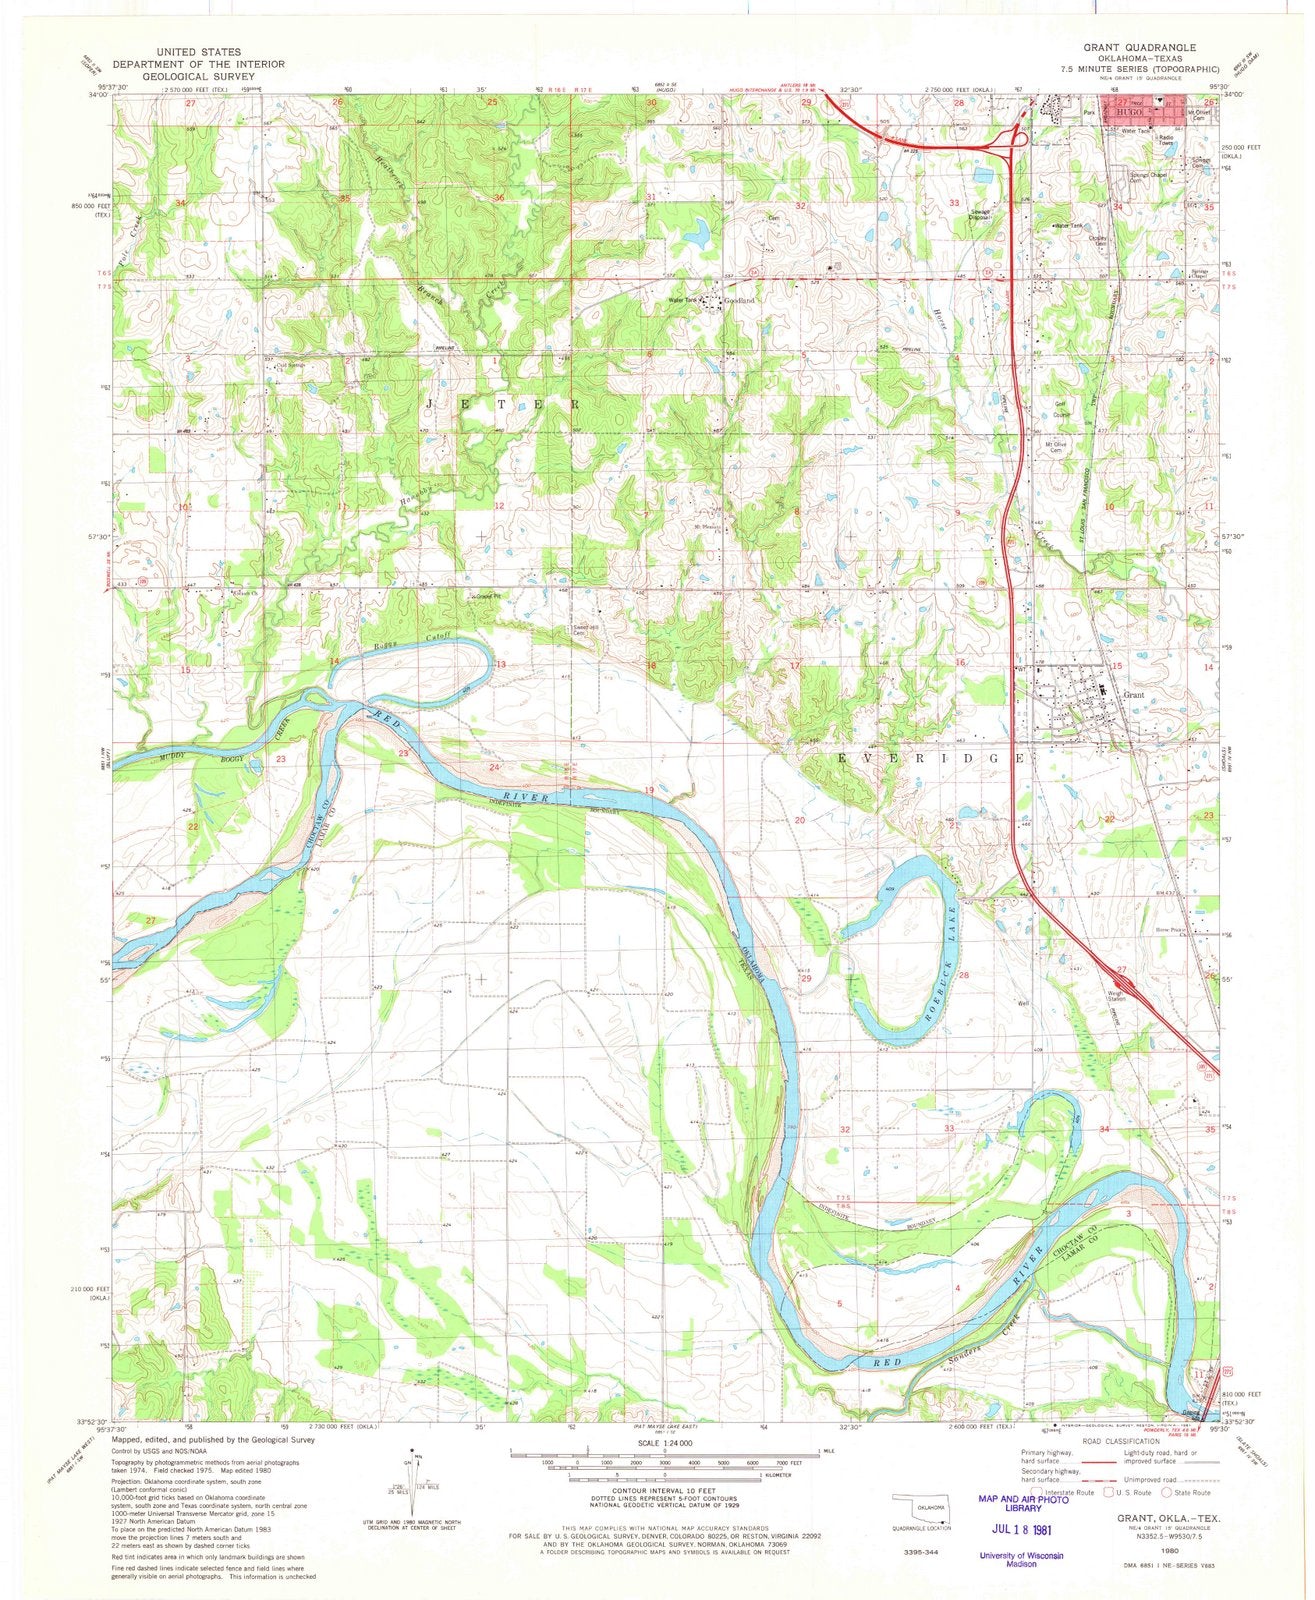 1980 Grant, OK - Oklahoma - USGS Topographic Map